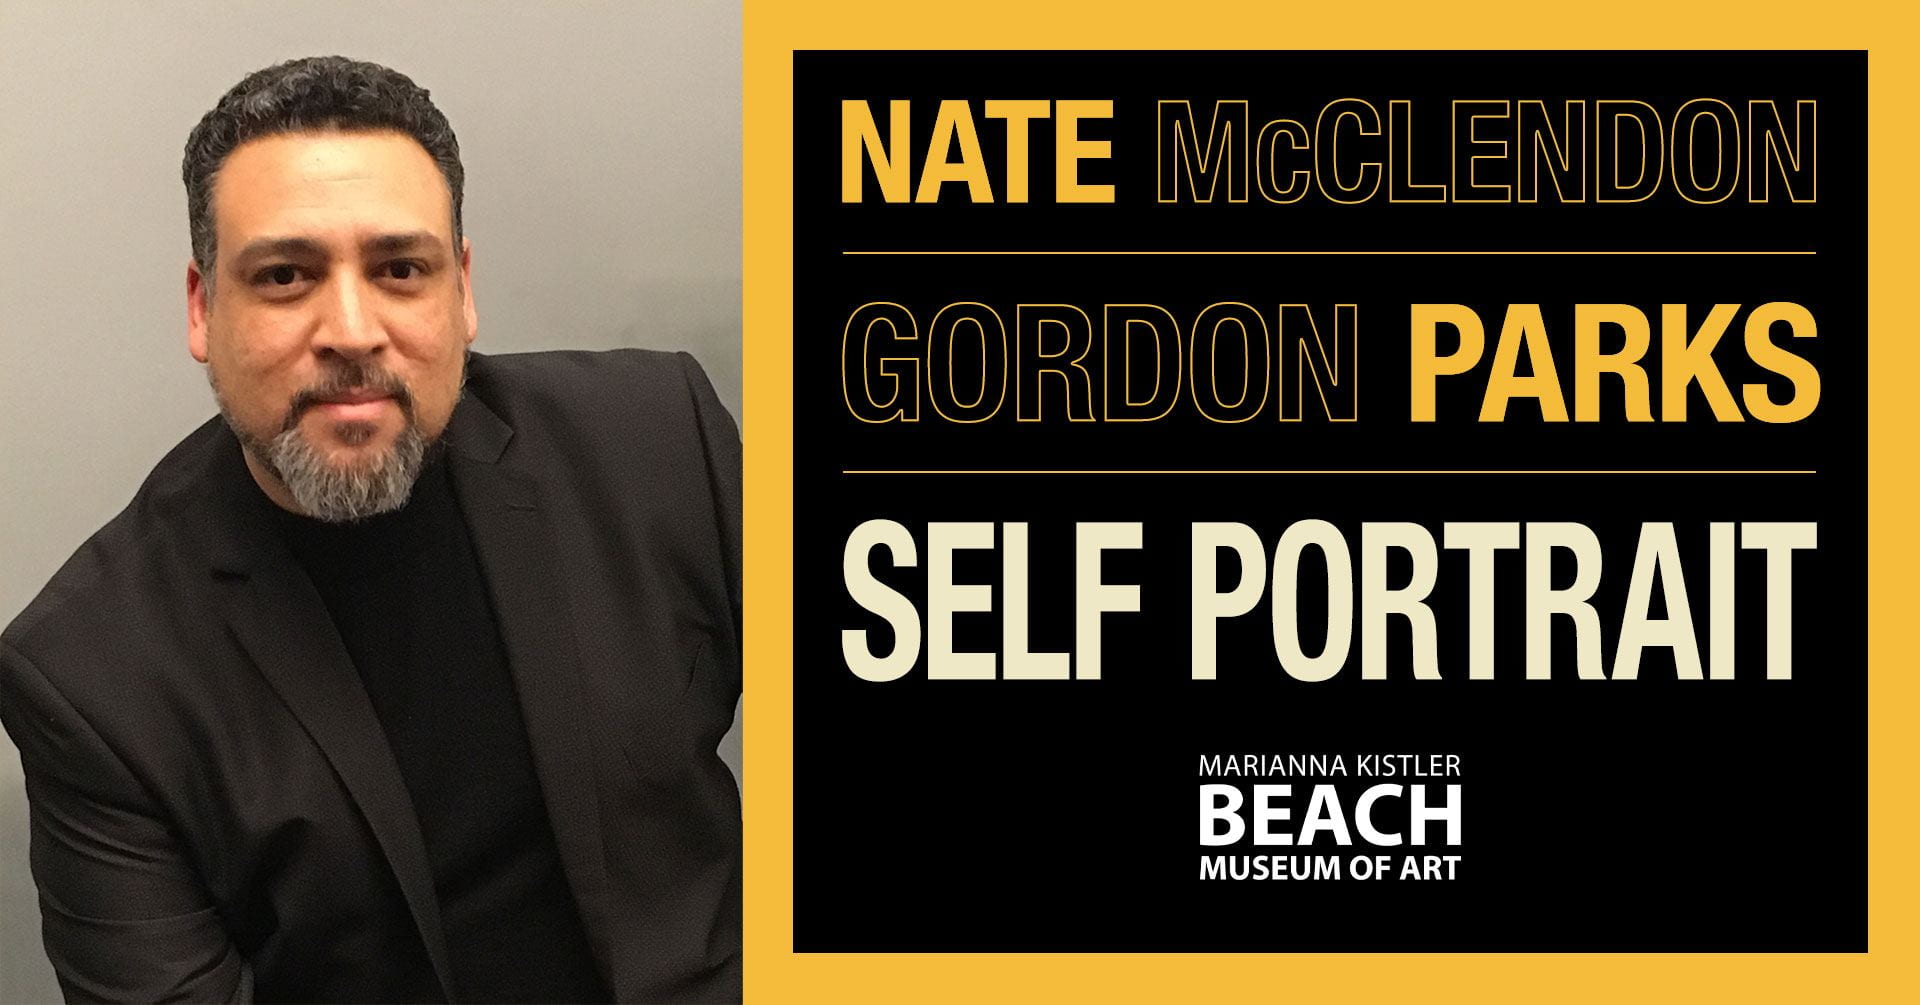 "Self Portrait: Gordon Parks" performance by saxophonist and Beach Museum of Art Teaching Artist Nate McClendon